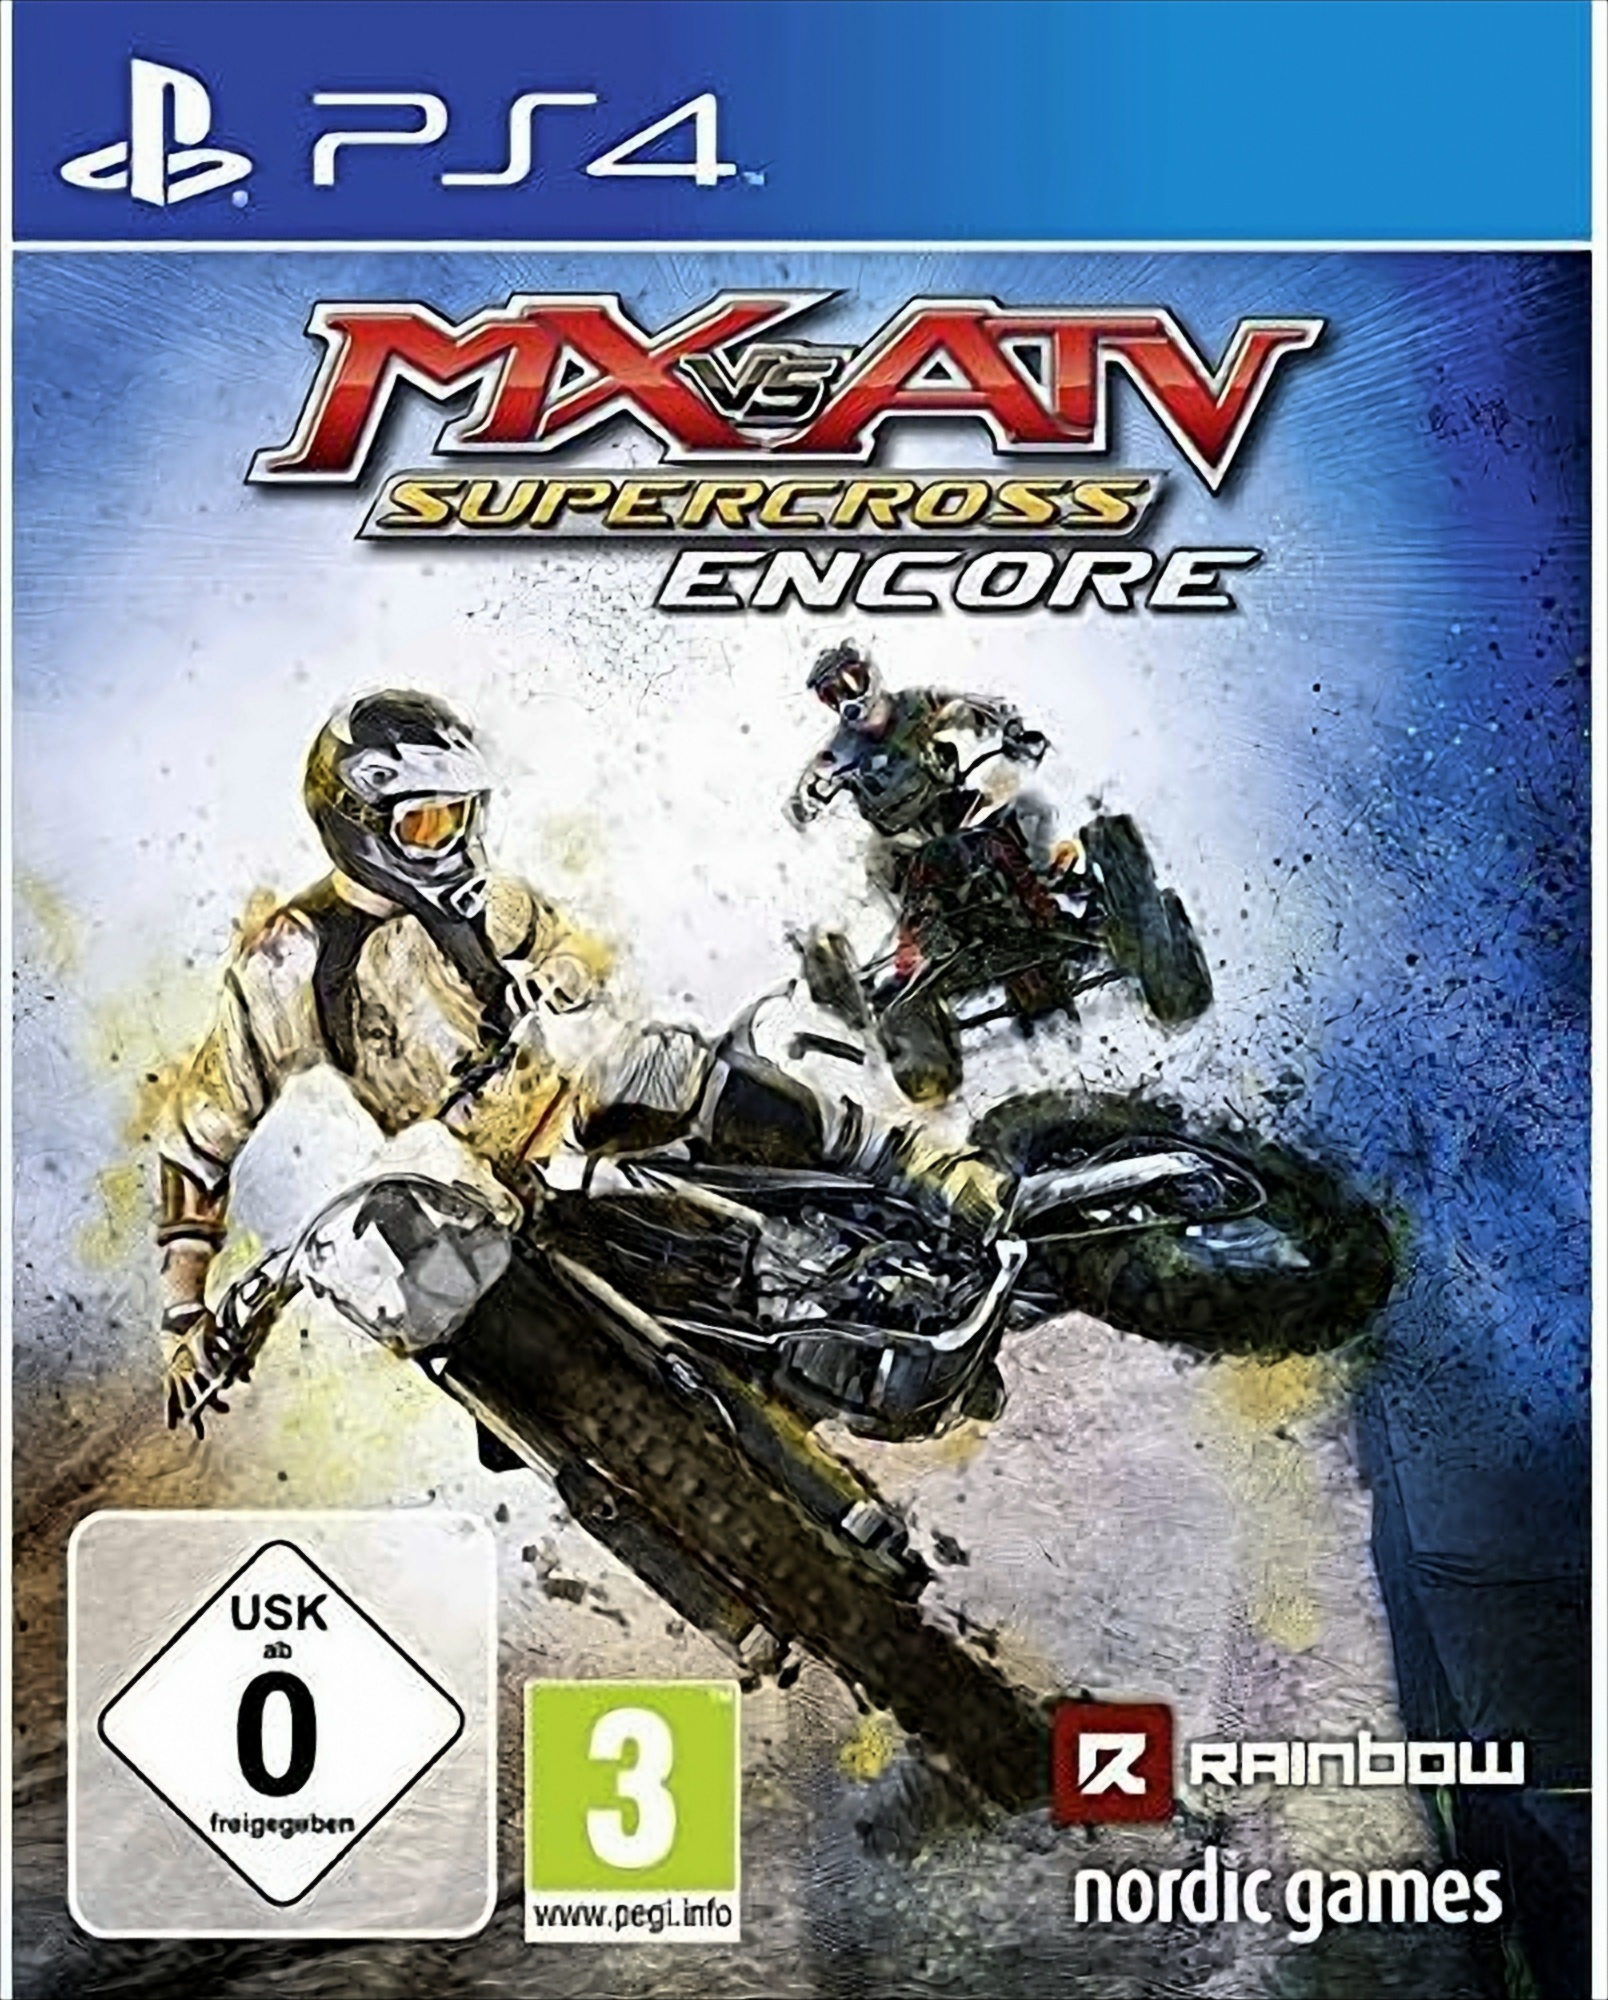 - Encore Supercross Edition - vs. 4] MX ATV [PlayStation